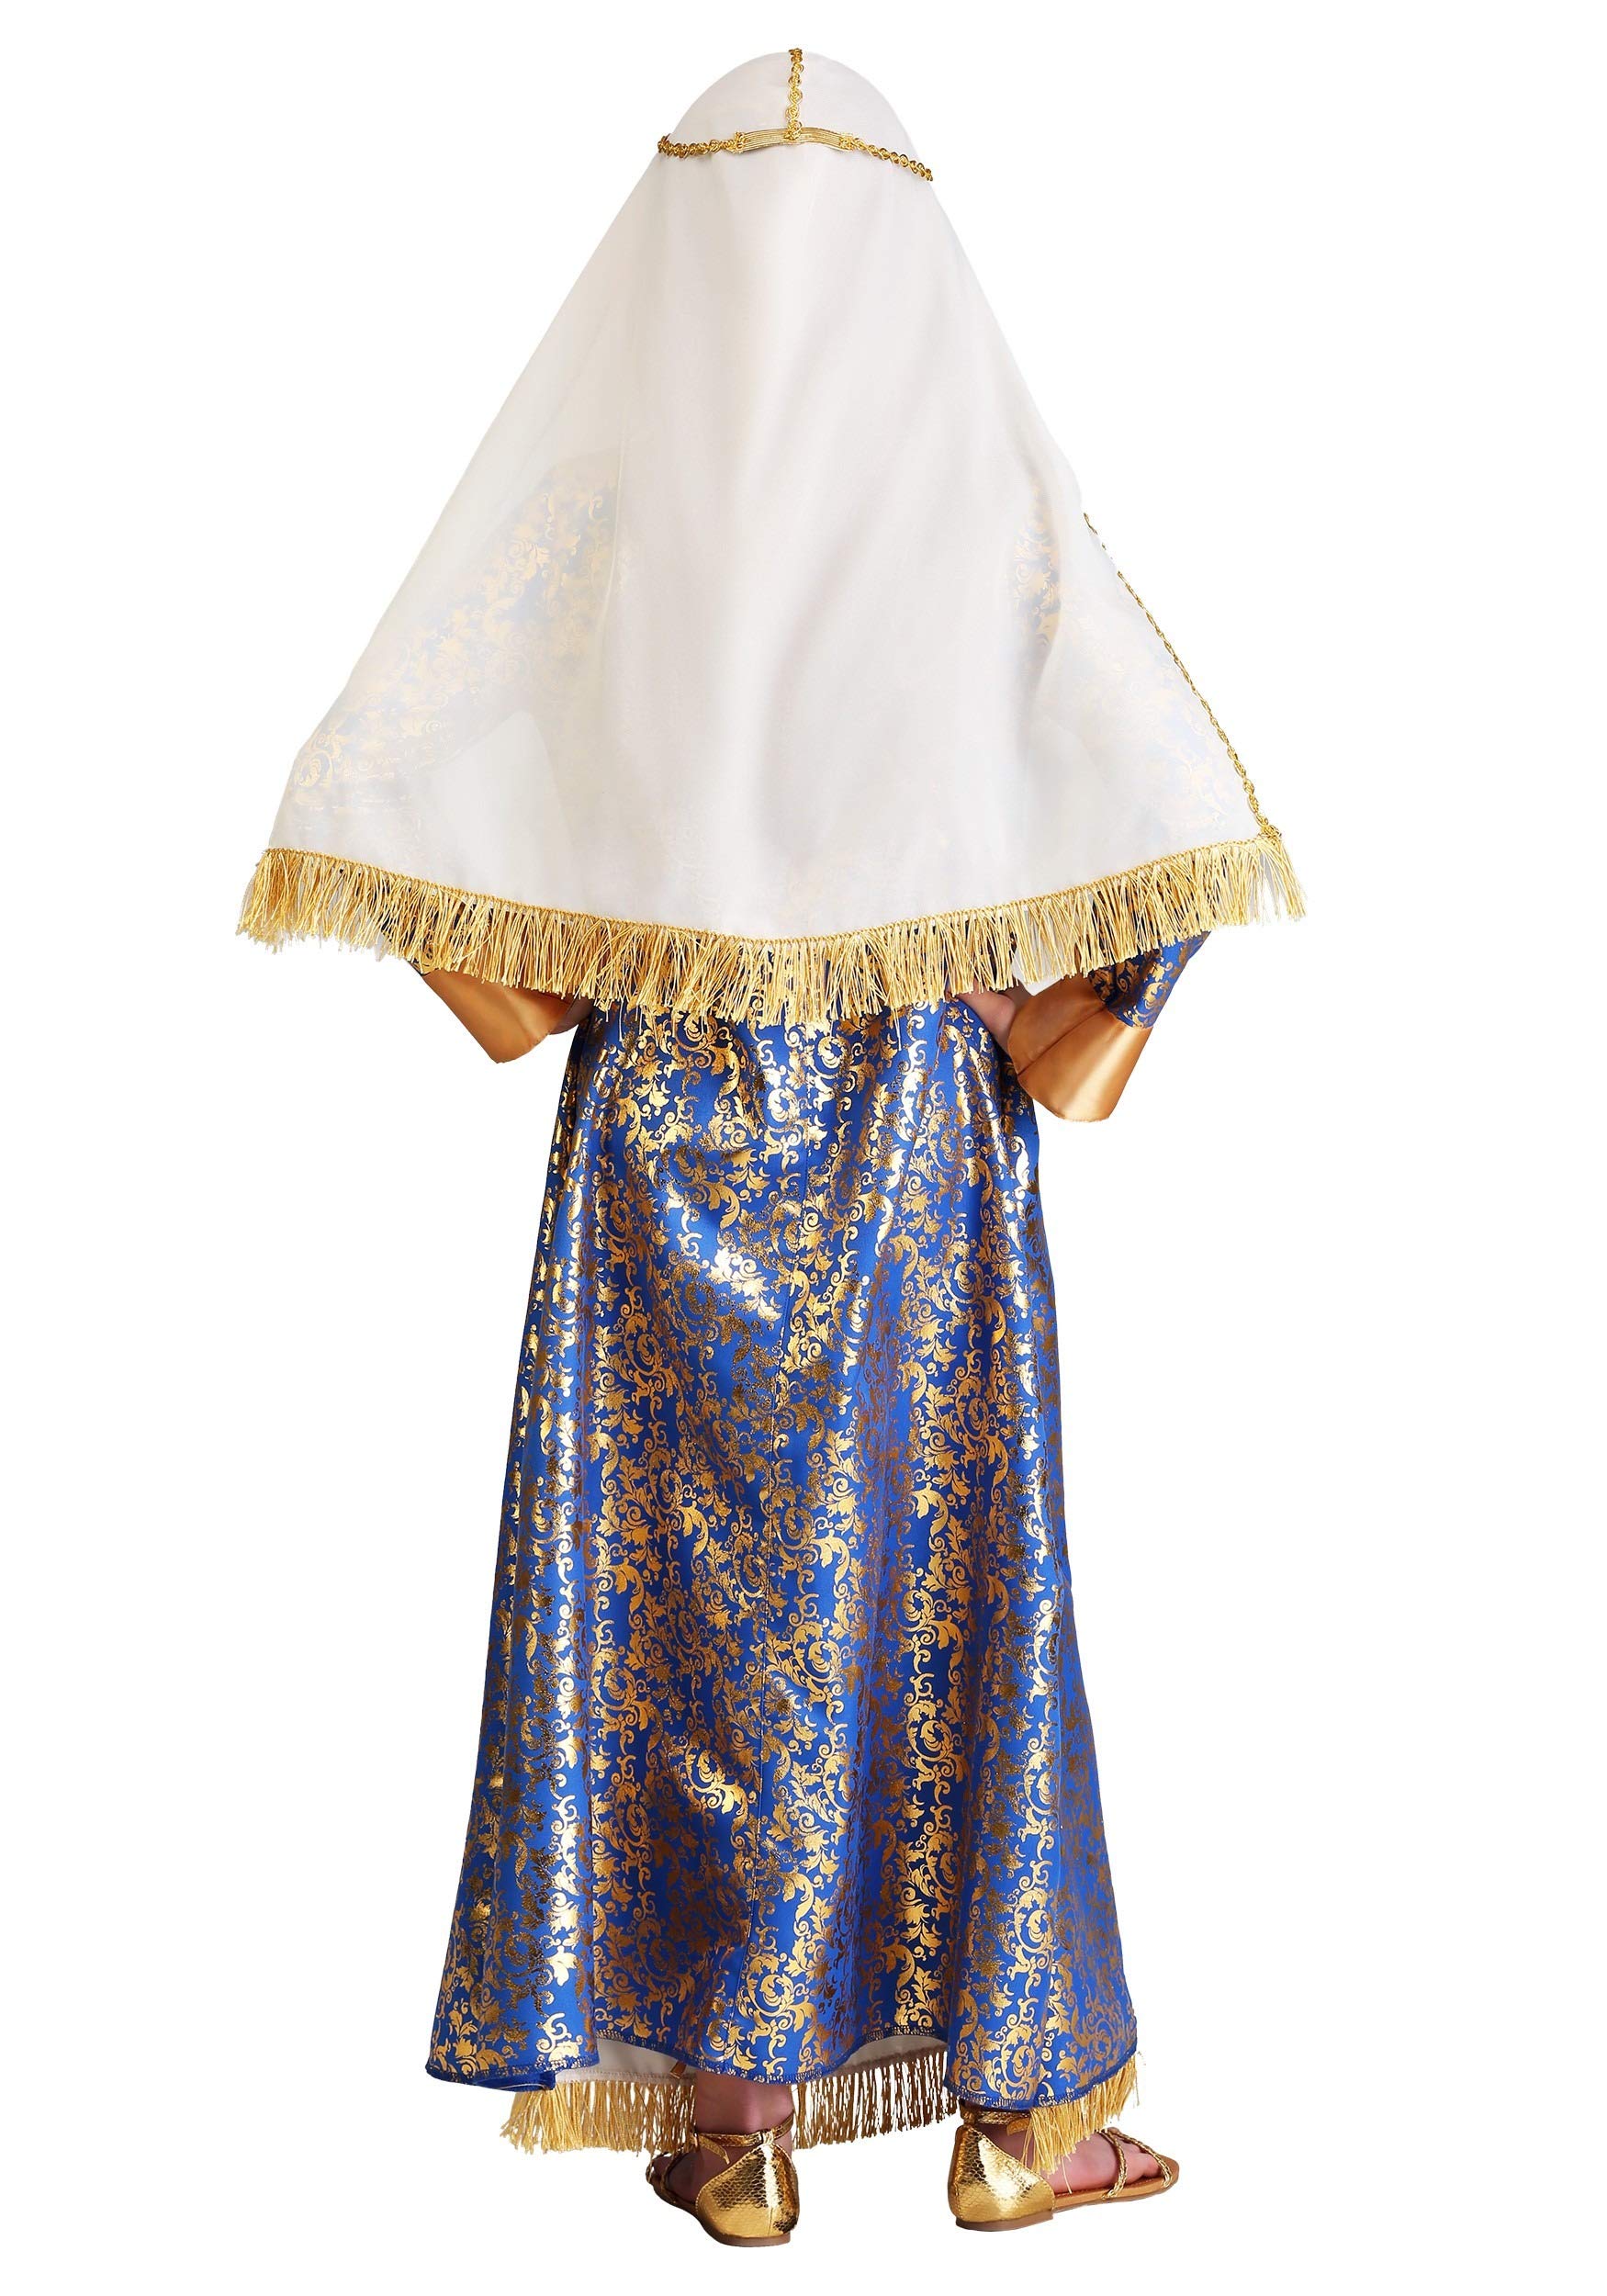 Child's Queen Esther Costume